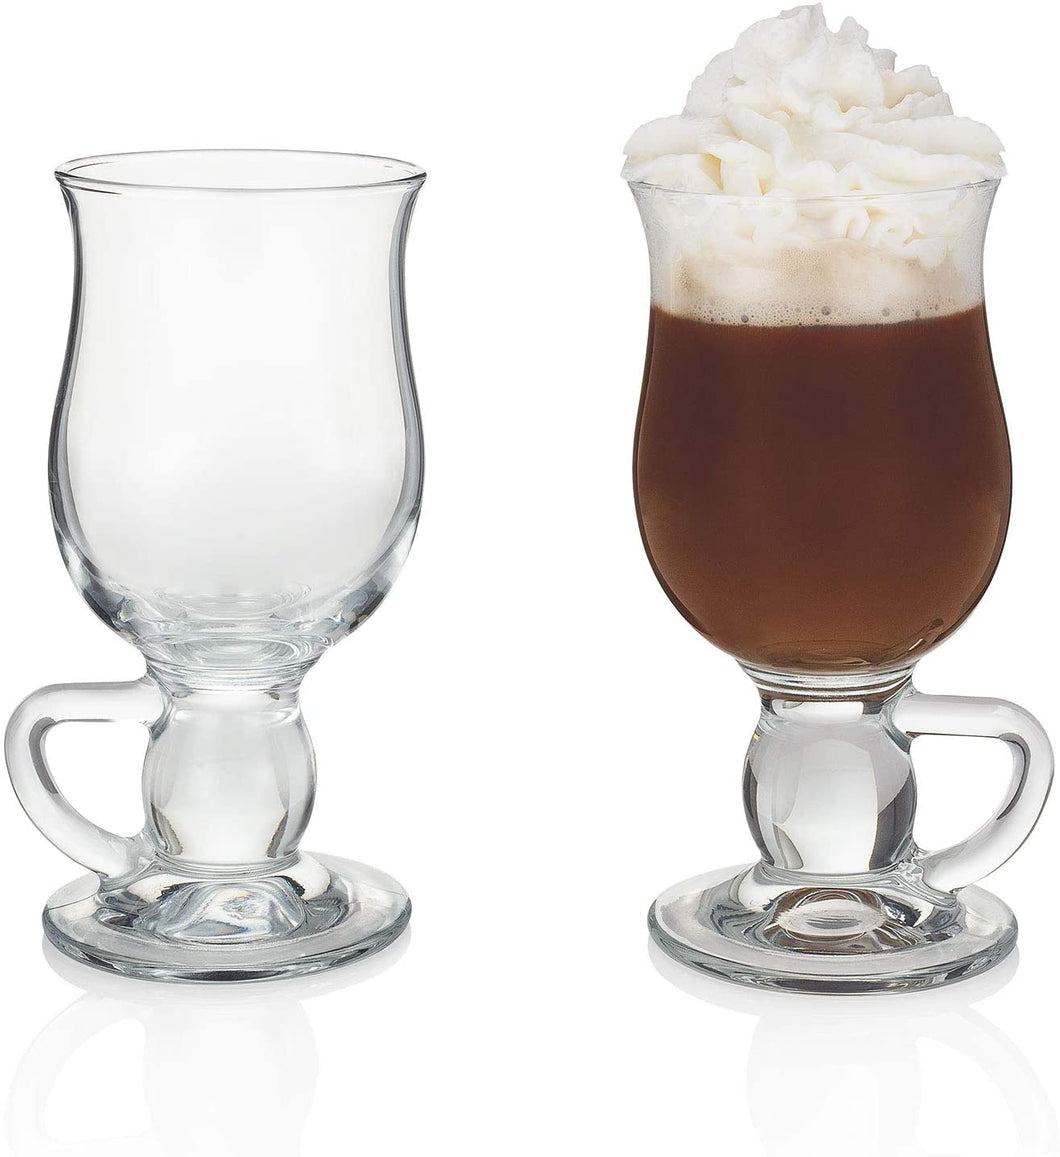 Irish Coffee Glass